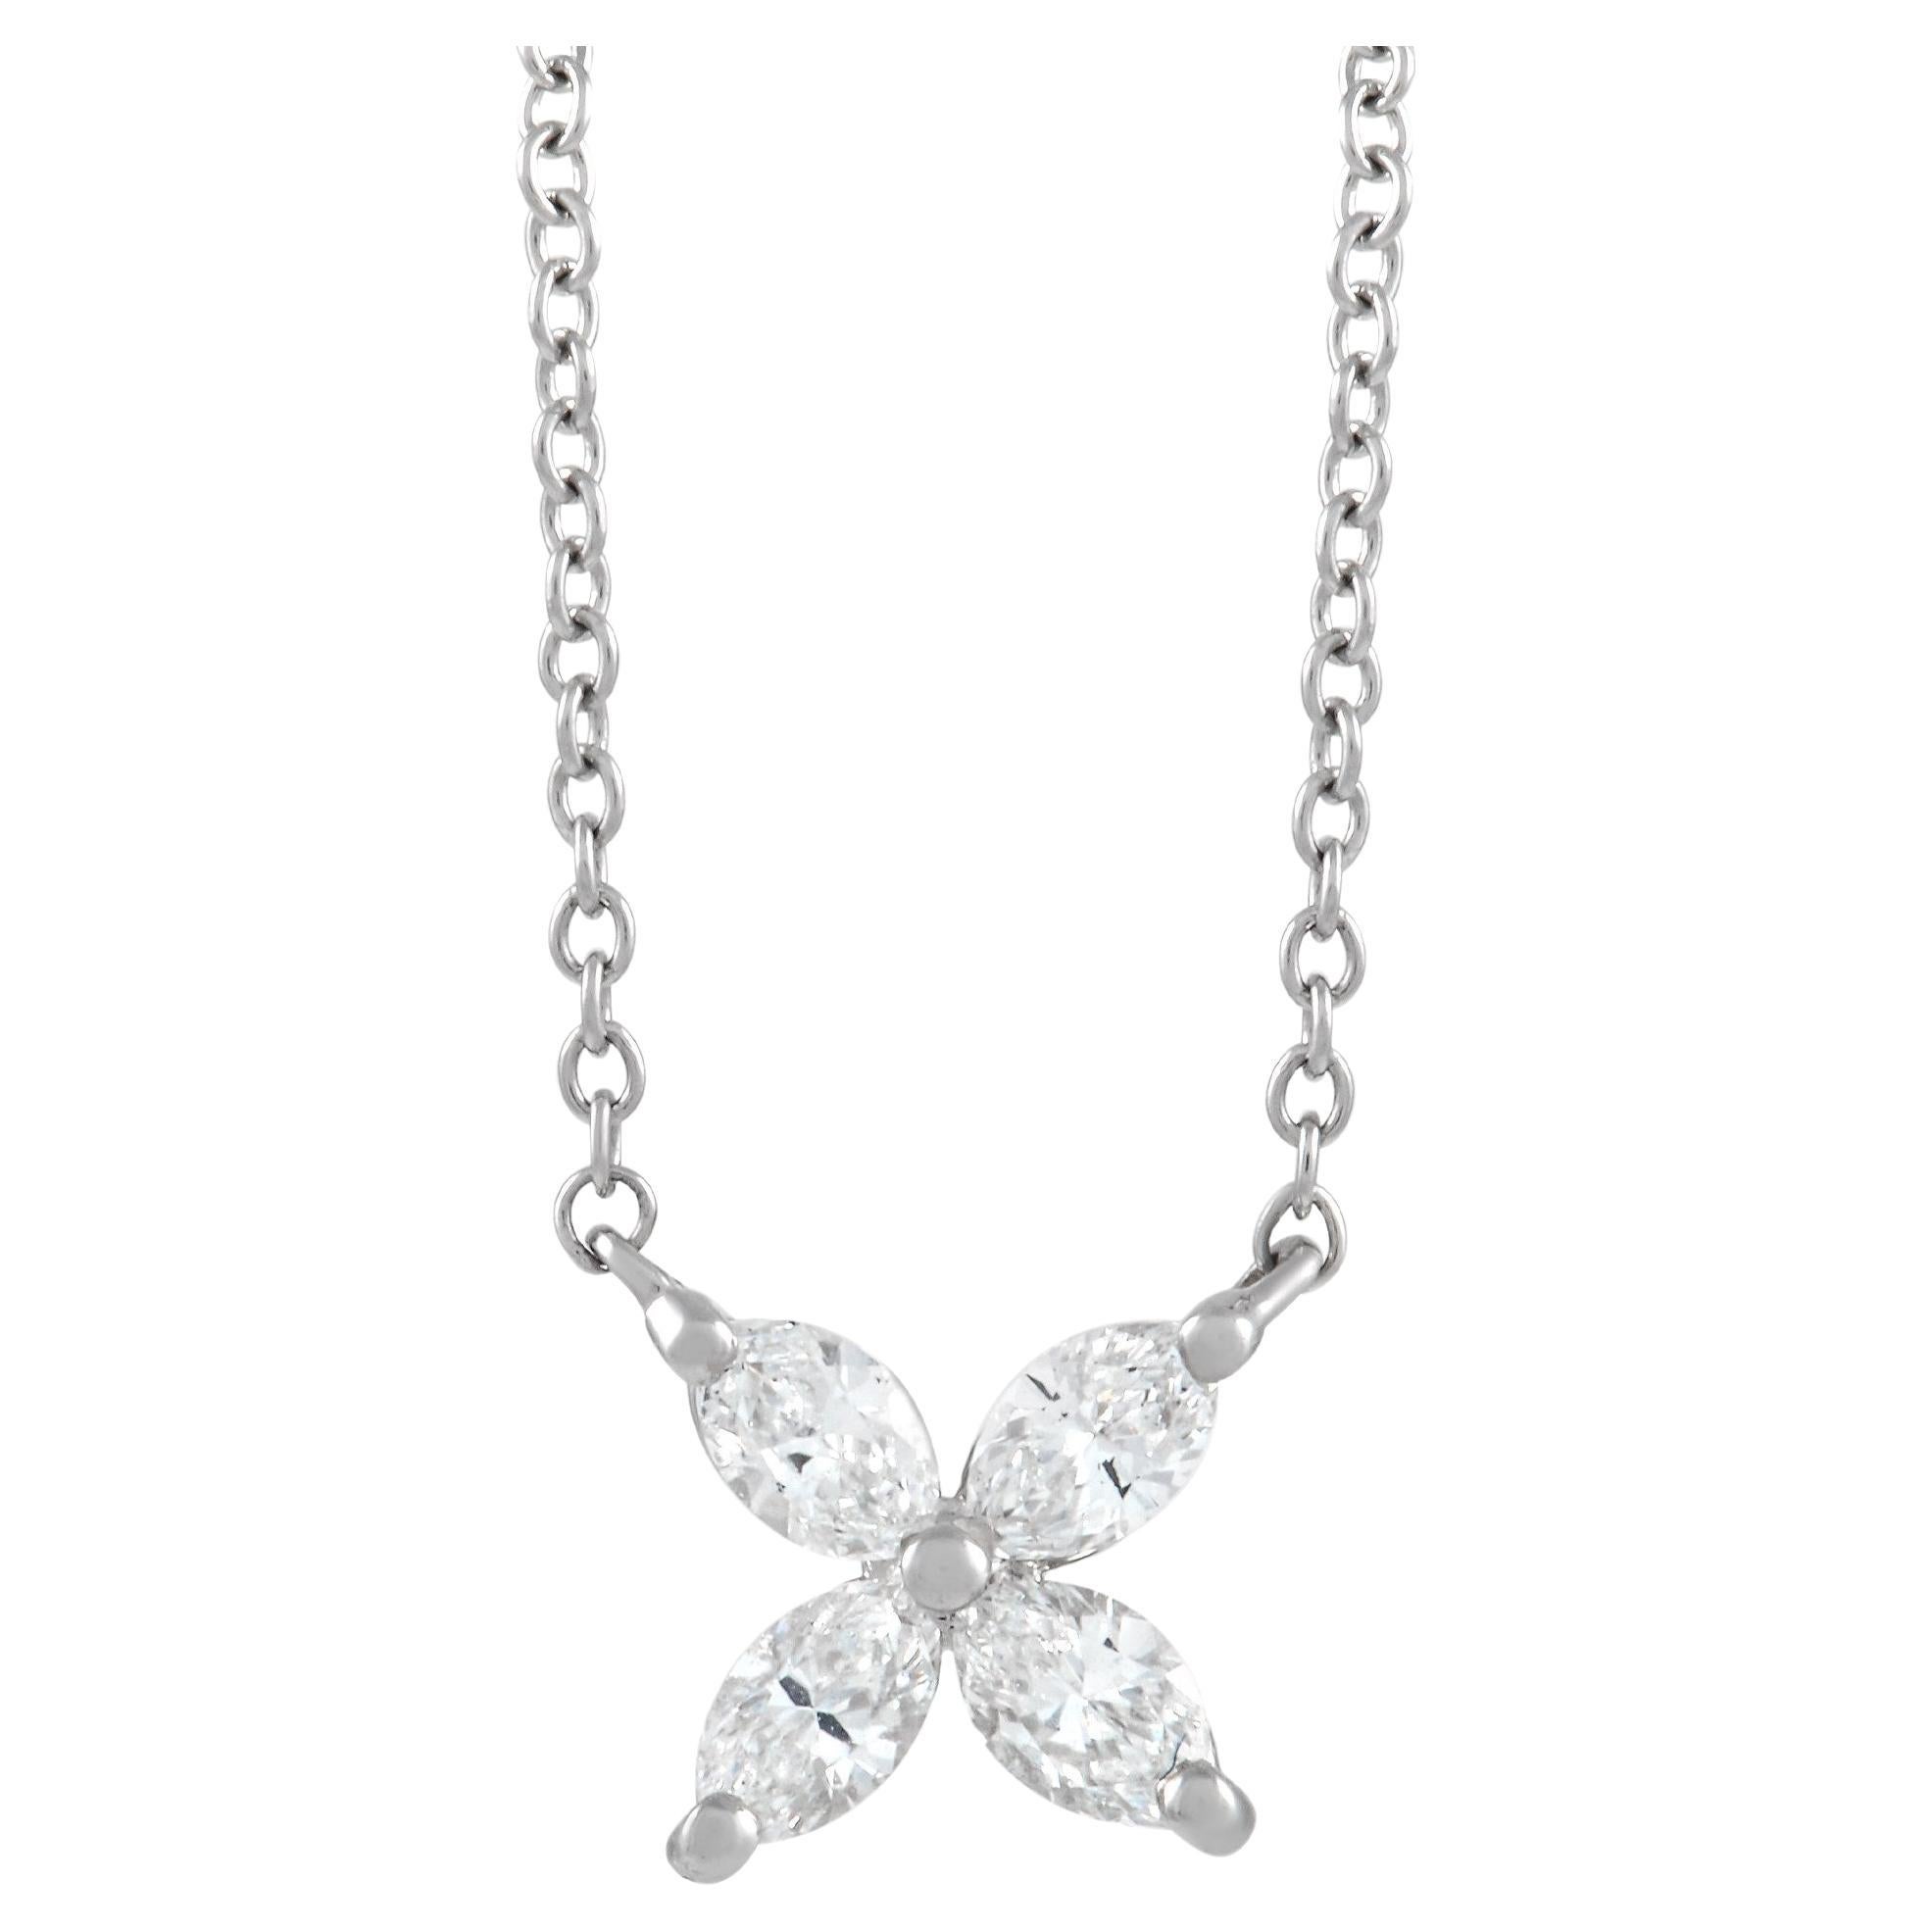 Tiffany & Co. Victoria Platinum 0.32 Ct Diamond Pendant Necklace